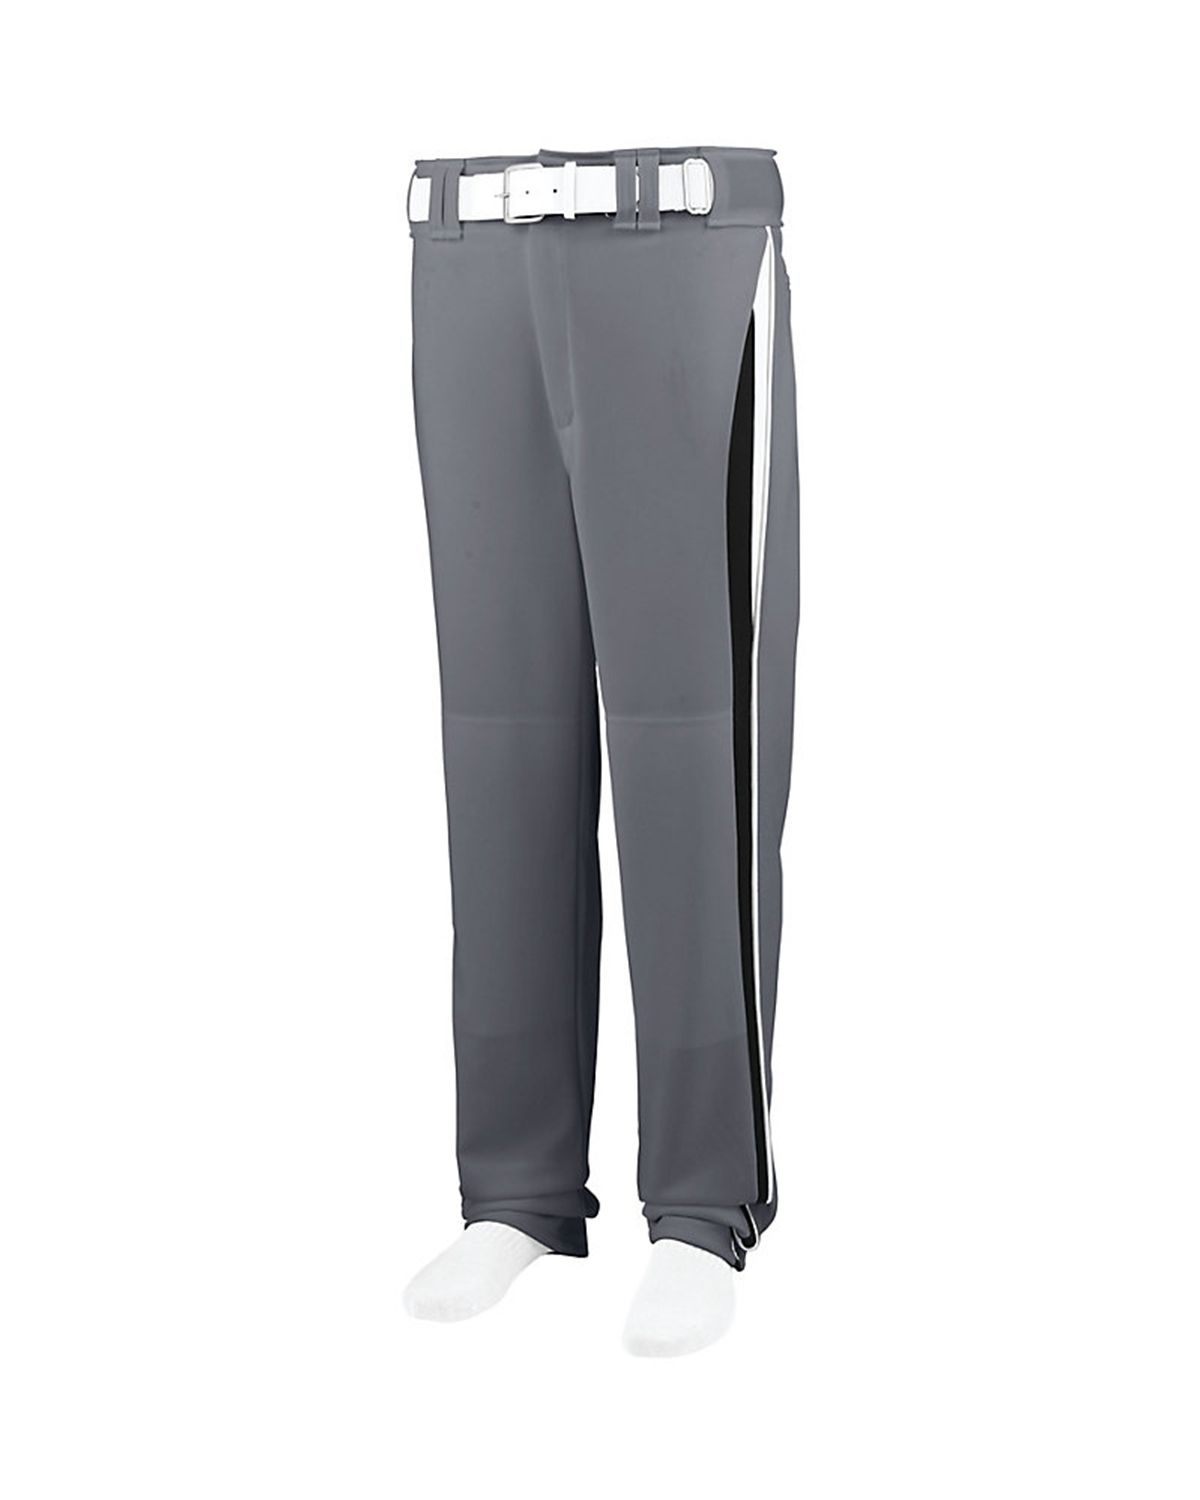 Augusta Sportswear 1475 Men's Line Drive Baseball/Softball Pant